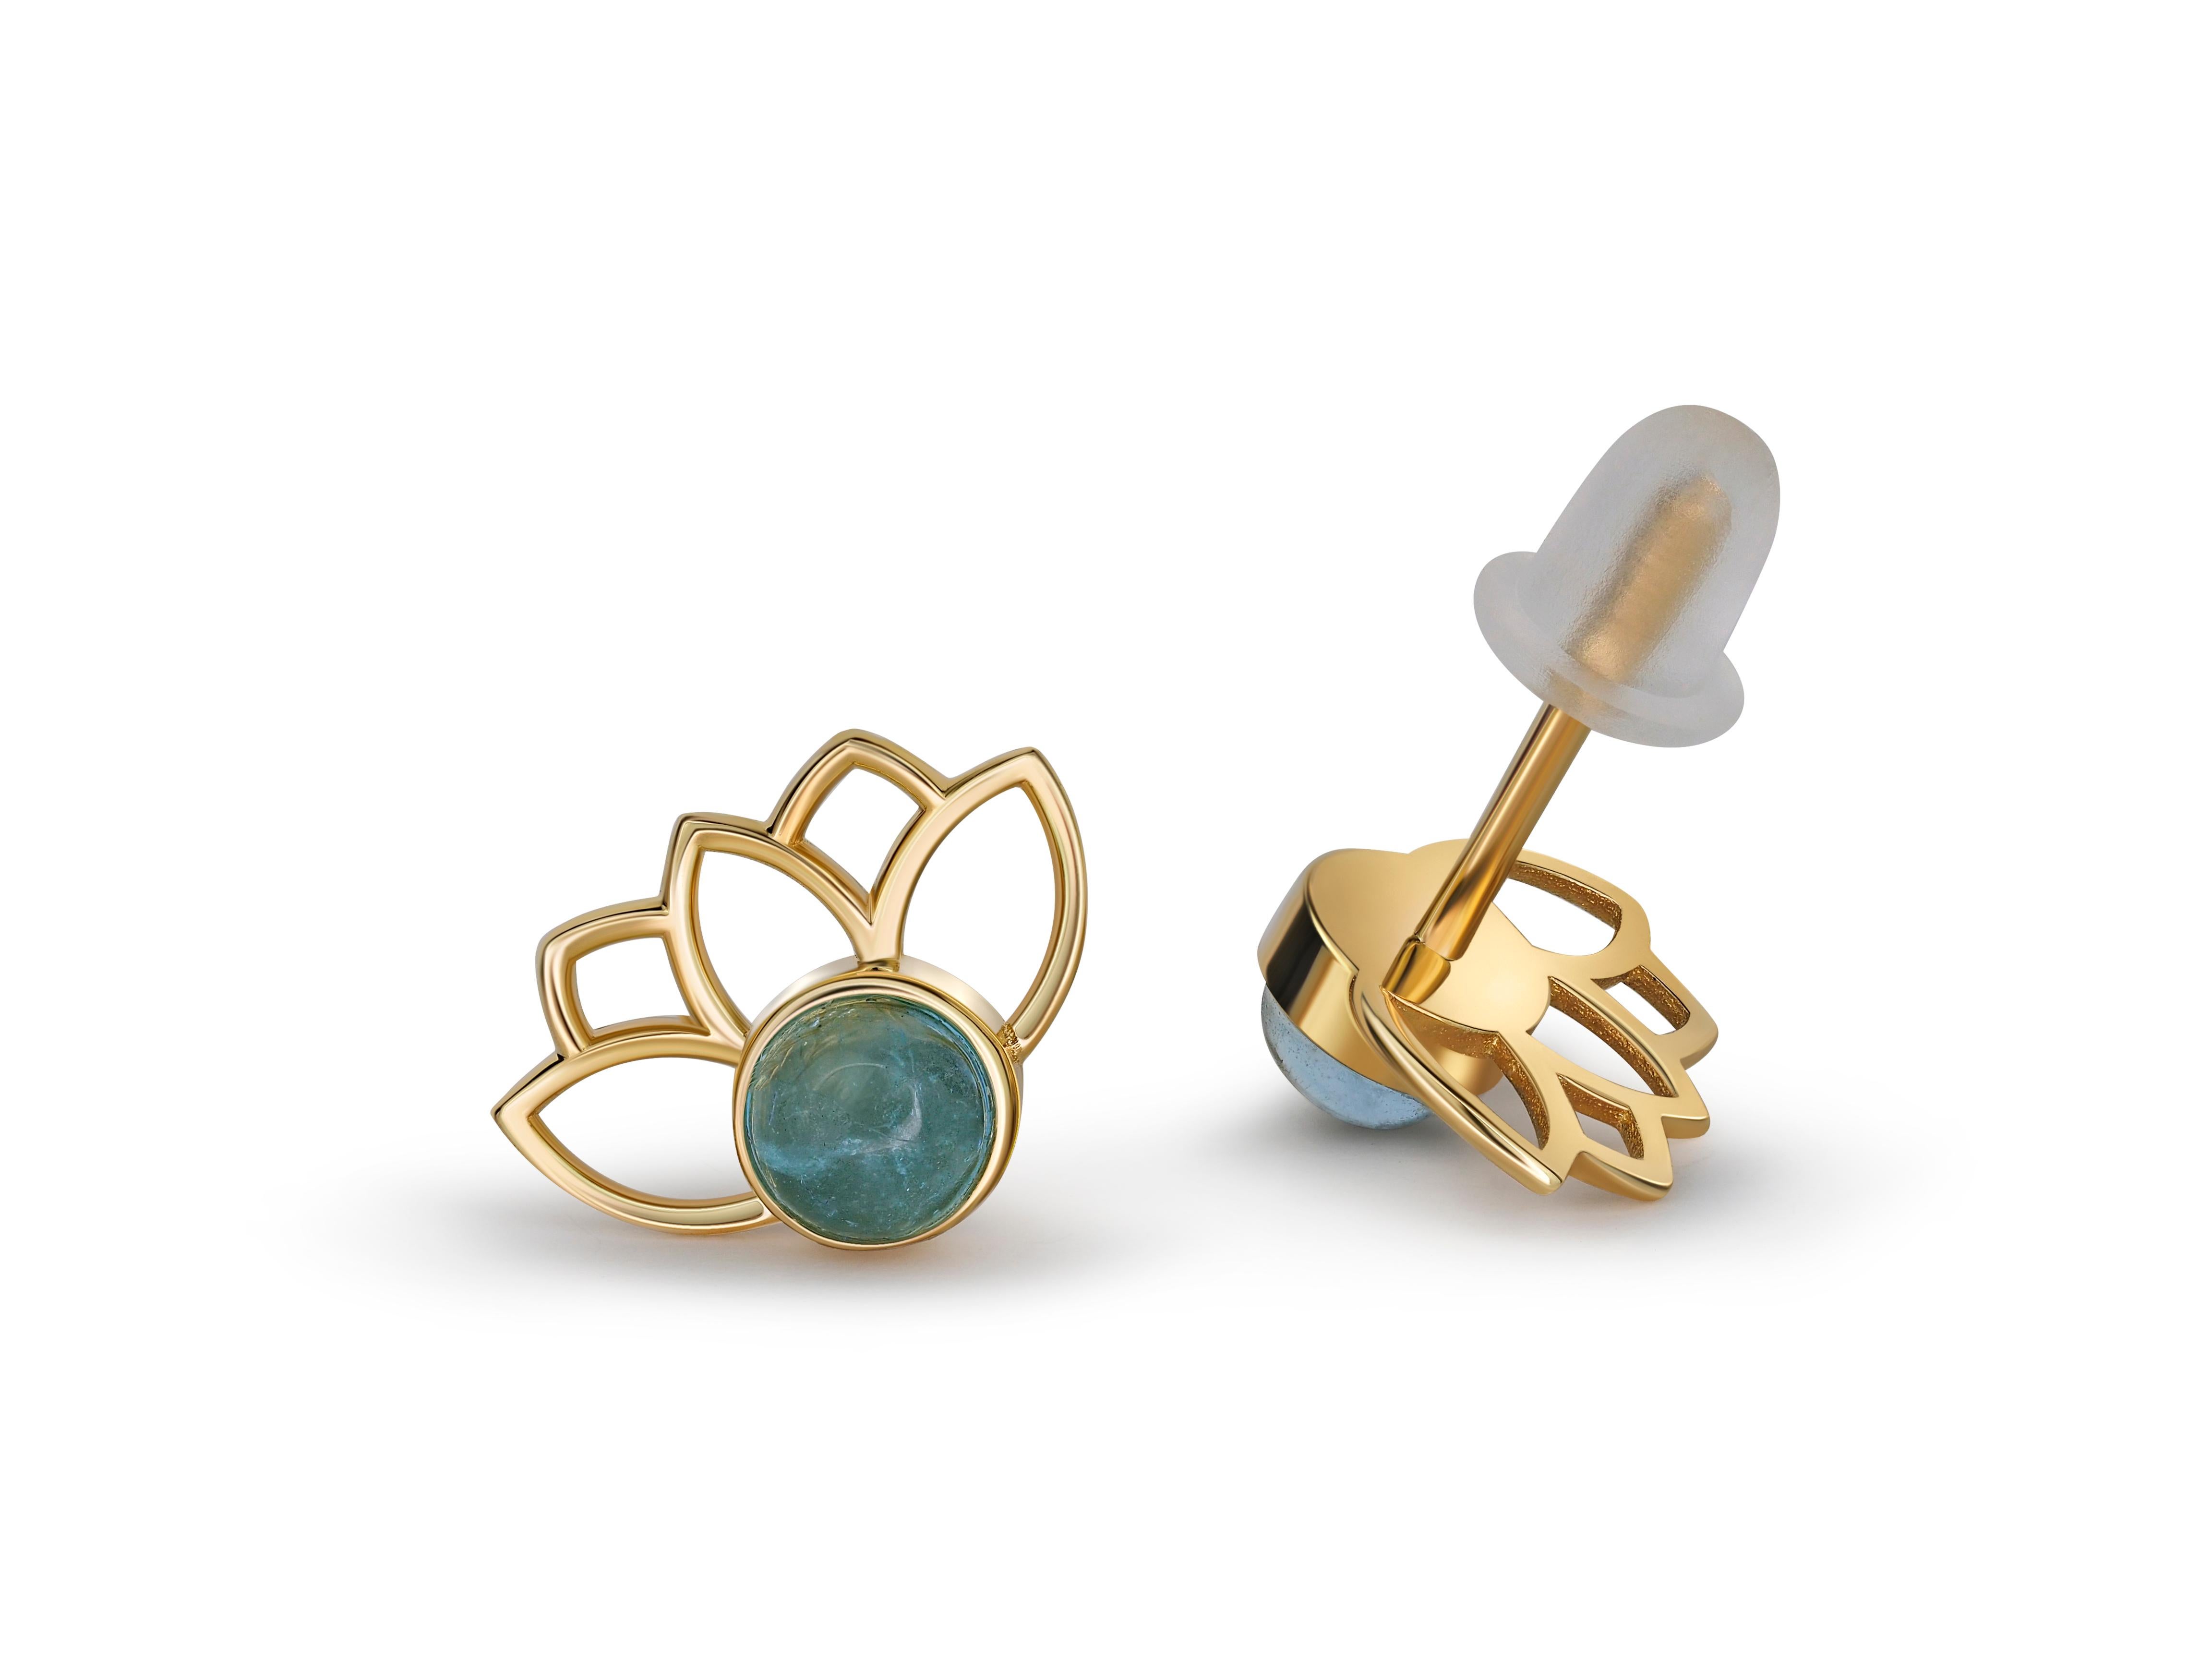 Modern Lotus Earrings Studs with Aquamarines in 14k Gold, Aquamarine Cab Earrings